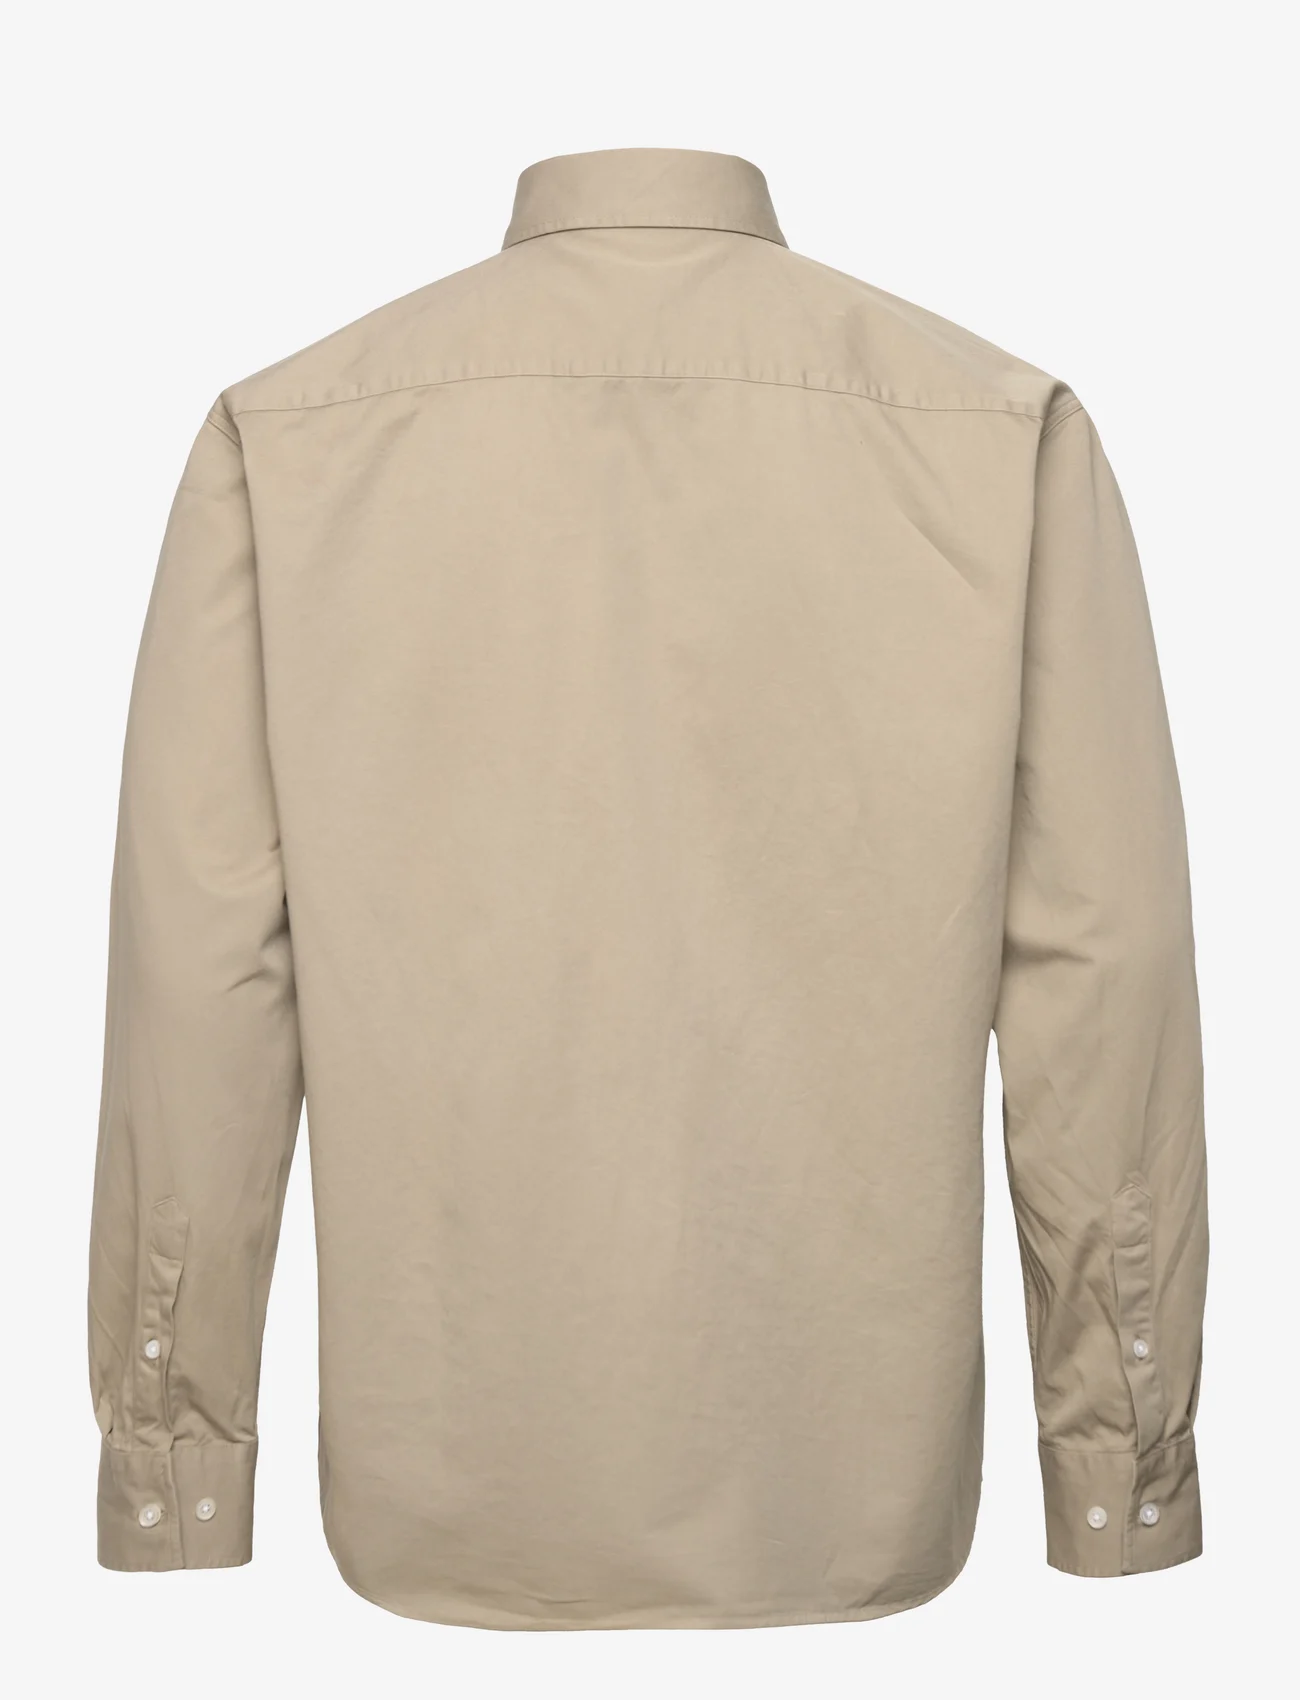 Armor Lux - Overshirt Héritage - basic skjorter - argile e23 - 1